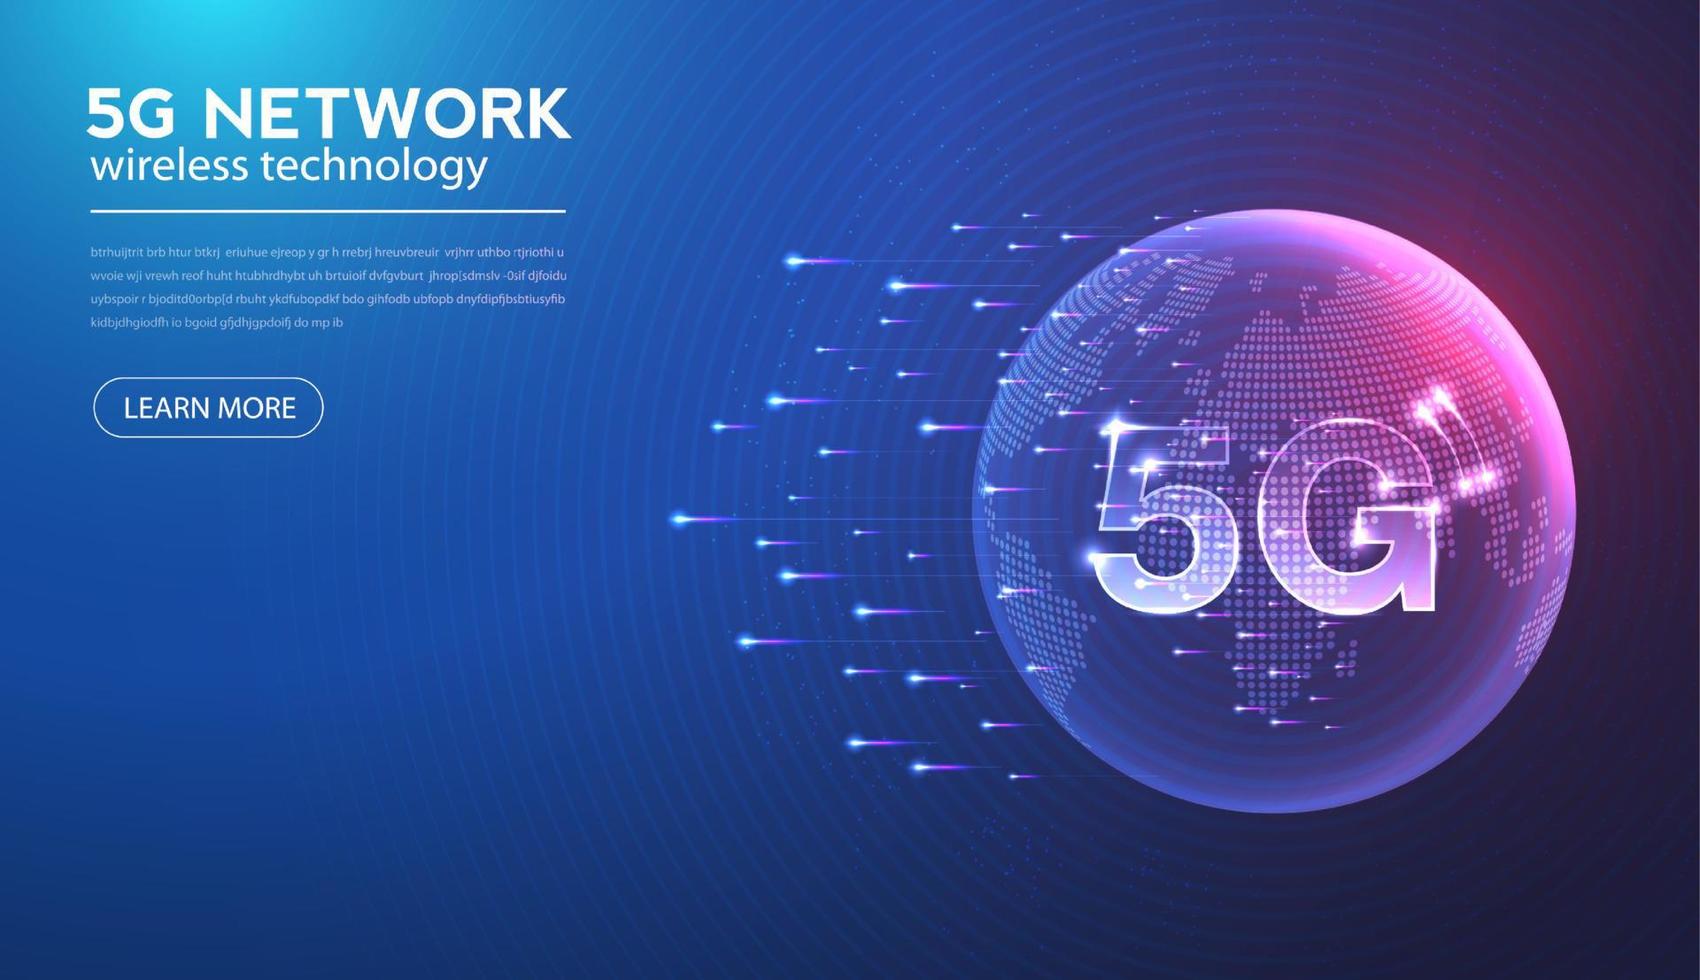 5g netwerk draadloos internet wi-fi verbinding en internet of things met modern. hoge snelheid innovatie verbinding datasnelheid technologie vectorillustratie. vector